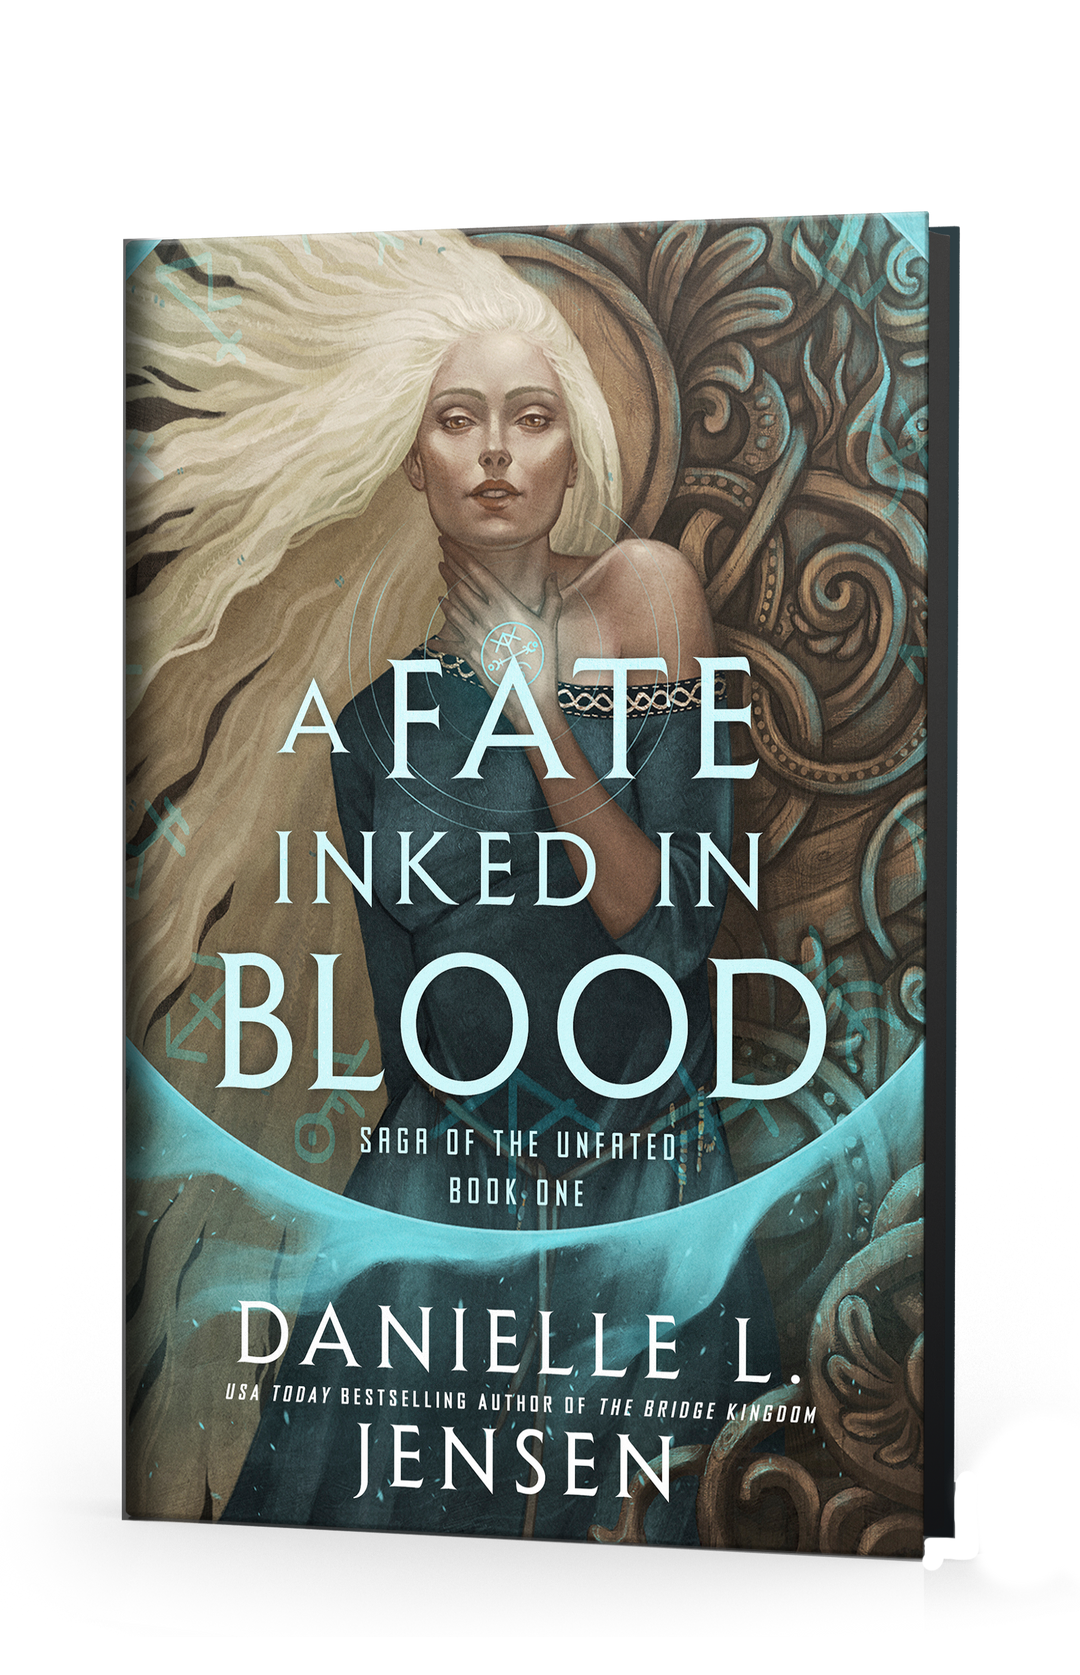 A Fate Inked In Blood by Danielle Jensen